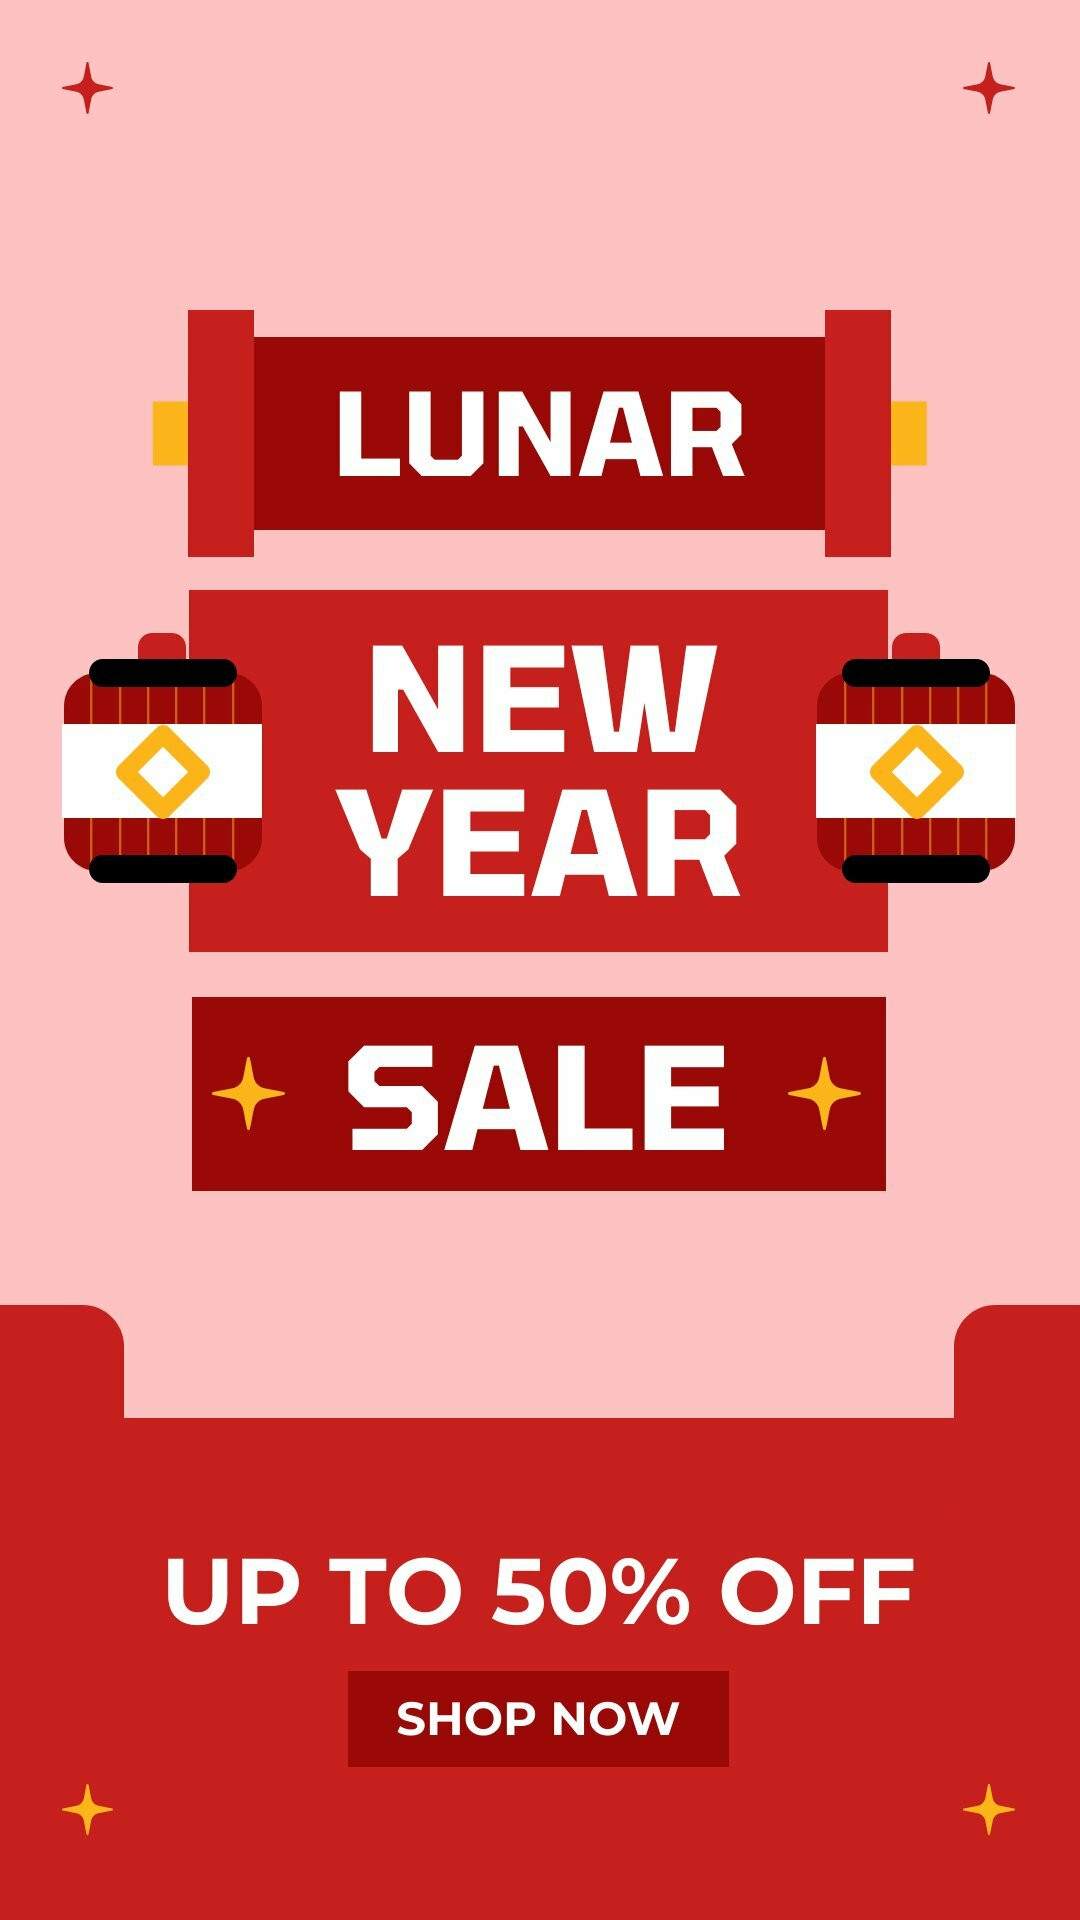 Lunar New Year Sale Instagram Story